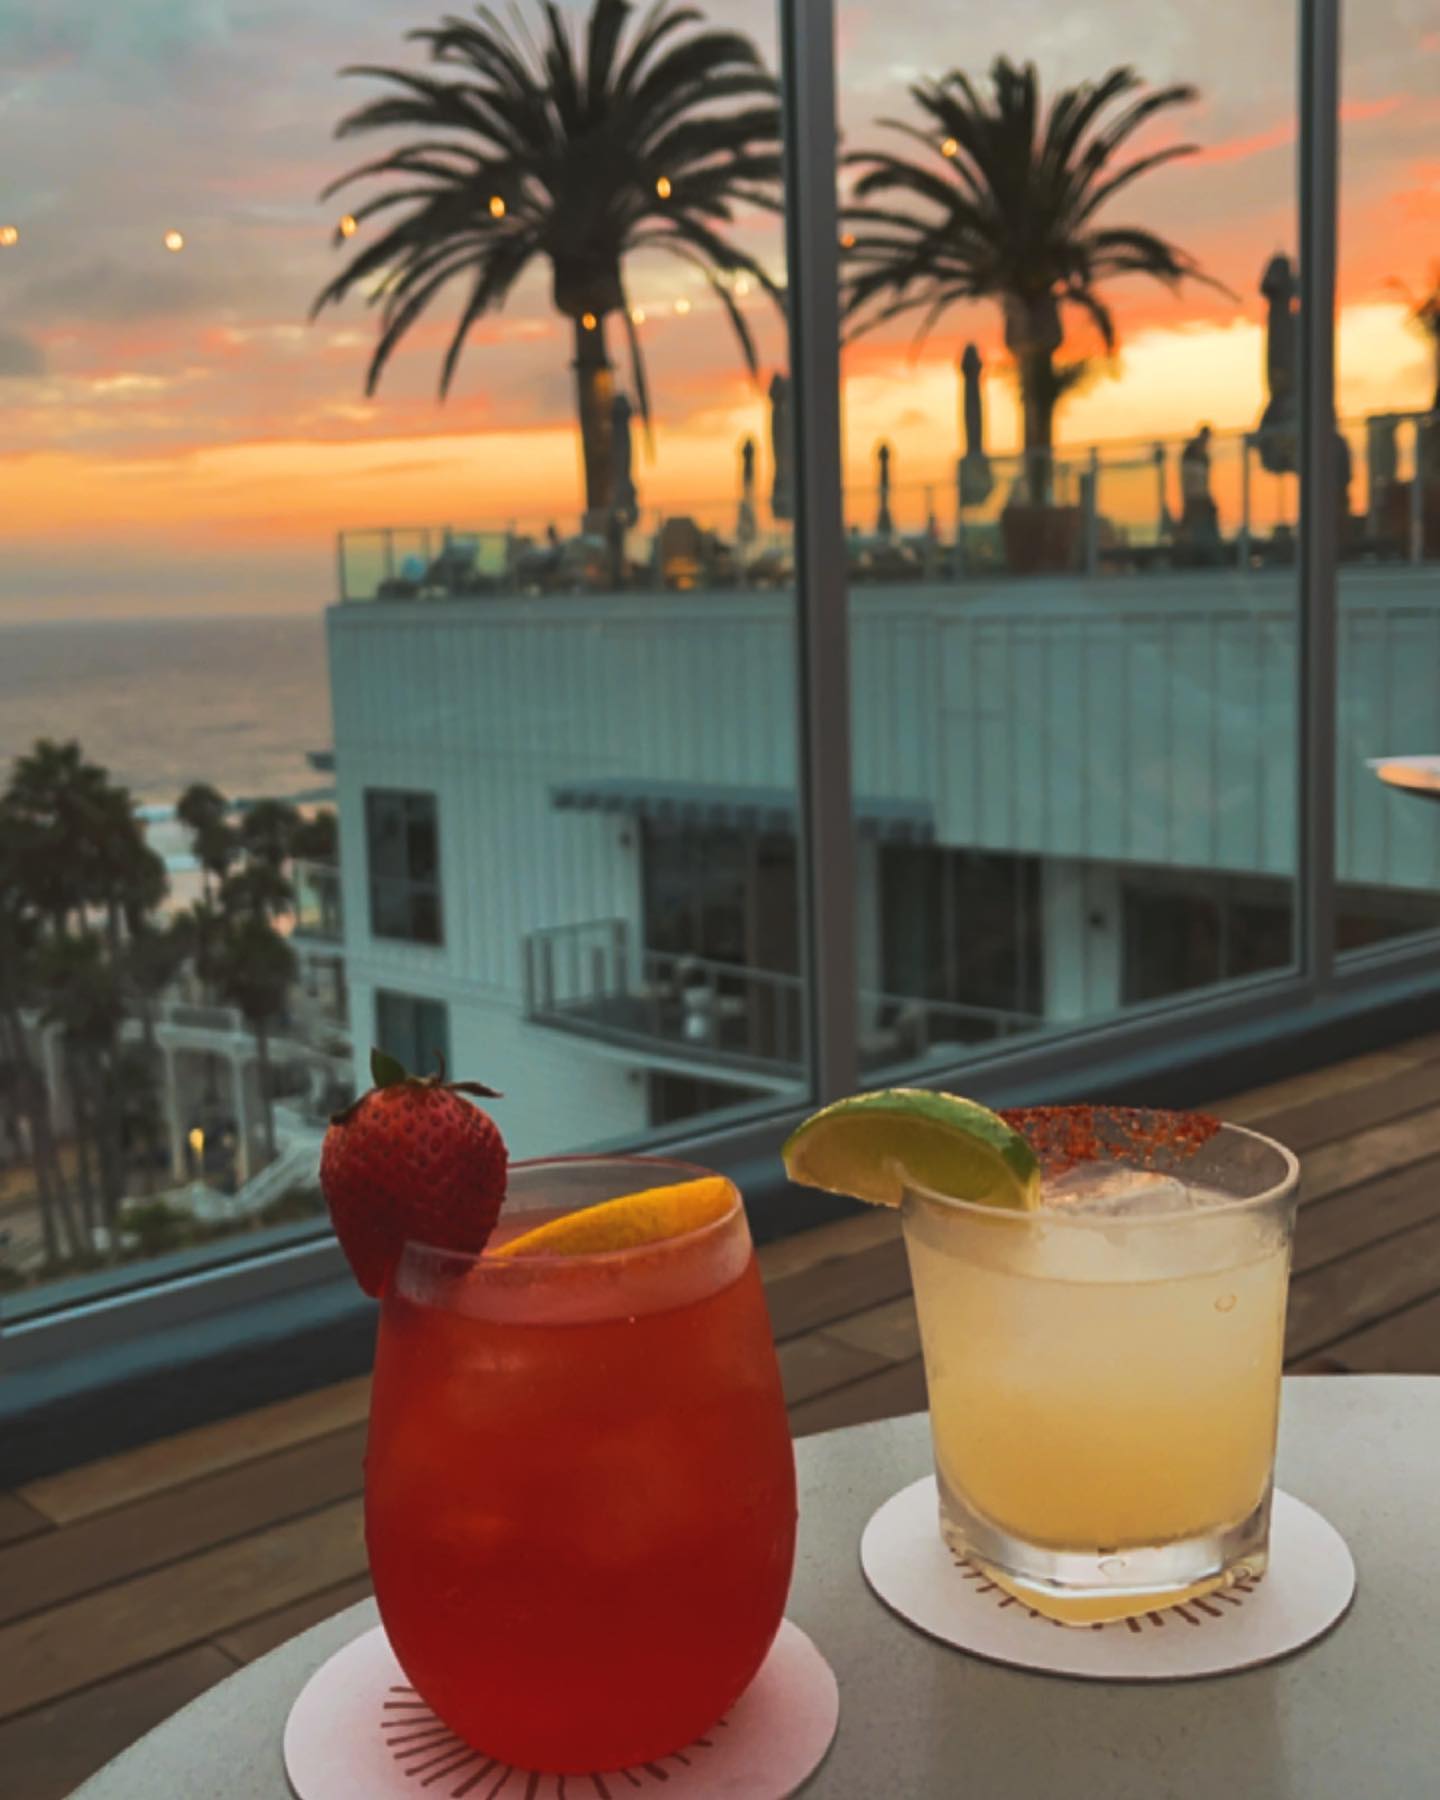 How we like to start the weekend 🤩 @rooftopbaroside